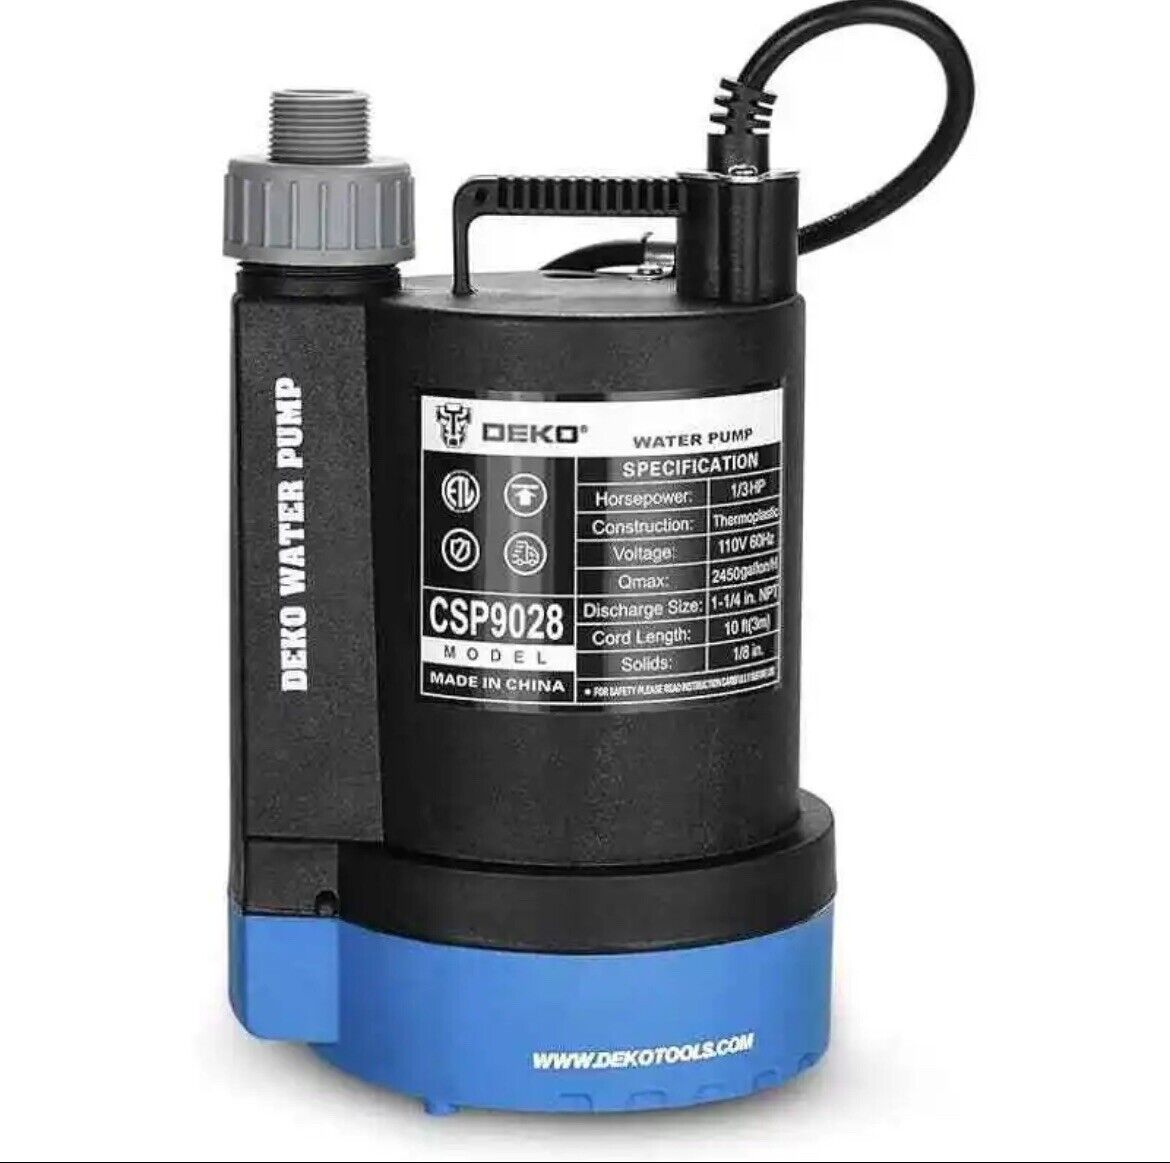 DEKOPRO Submersible Water Pump 1/3 HP 2450GPH Utility Pump Thermoplastic 